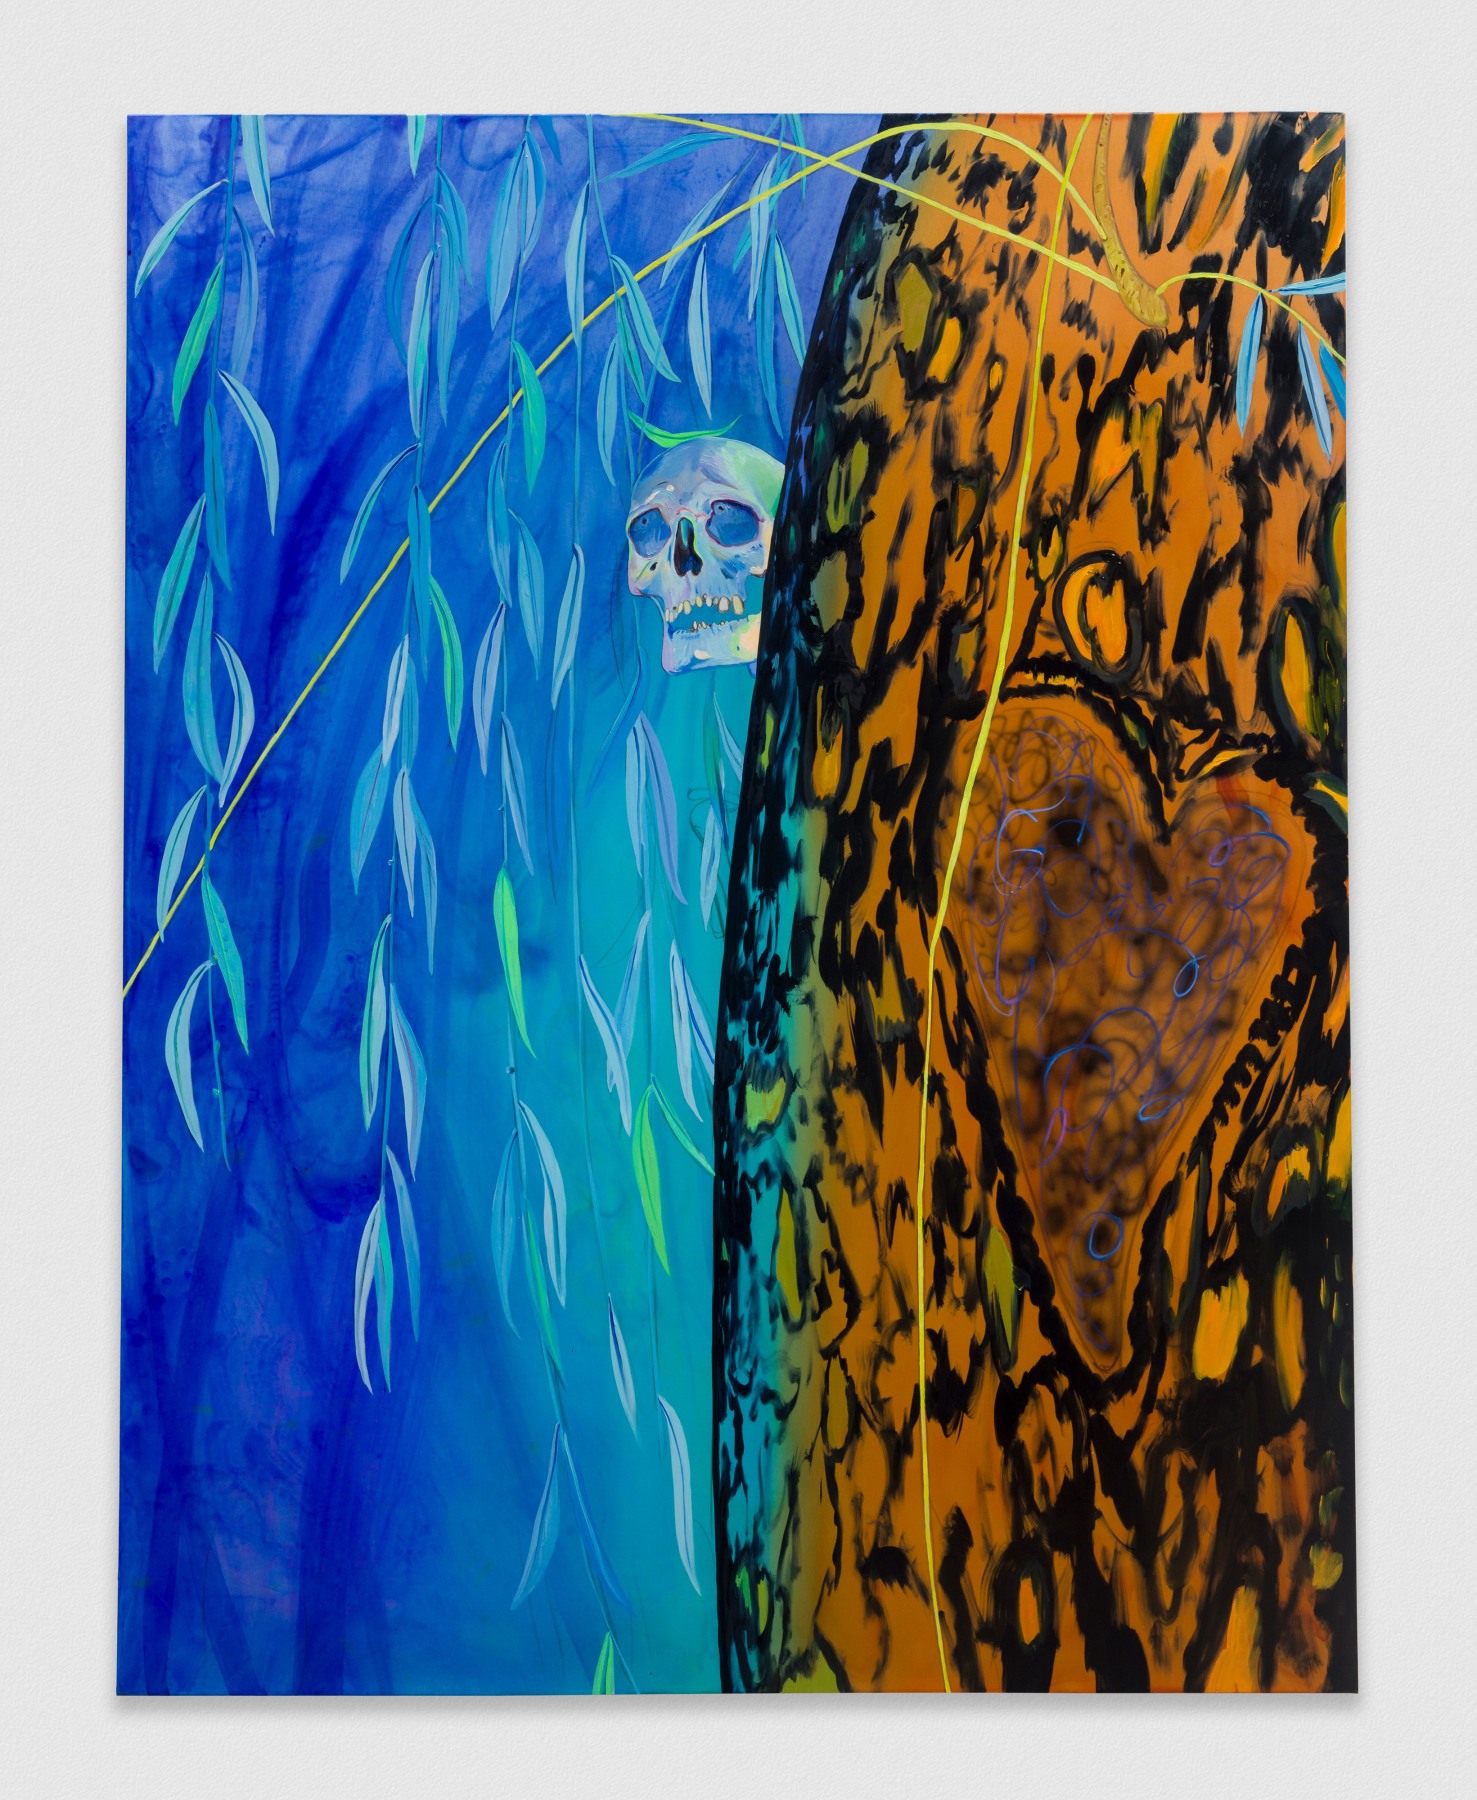 Paul Heyer, "Behind the Weeping Willow (Looking at an Owl)", Artwork